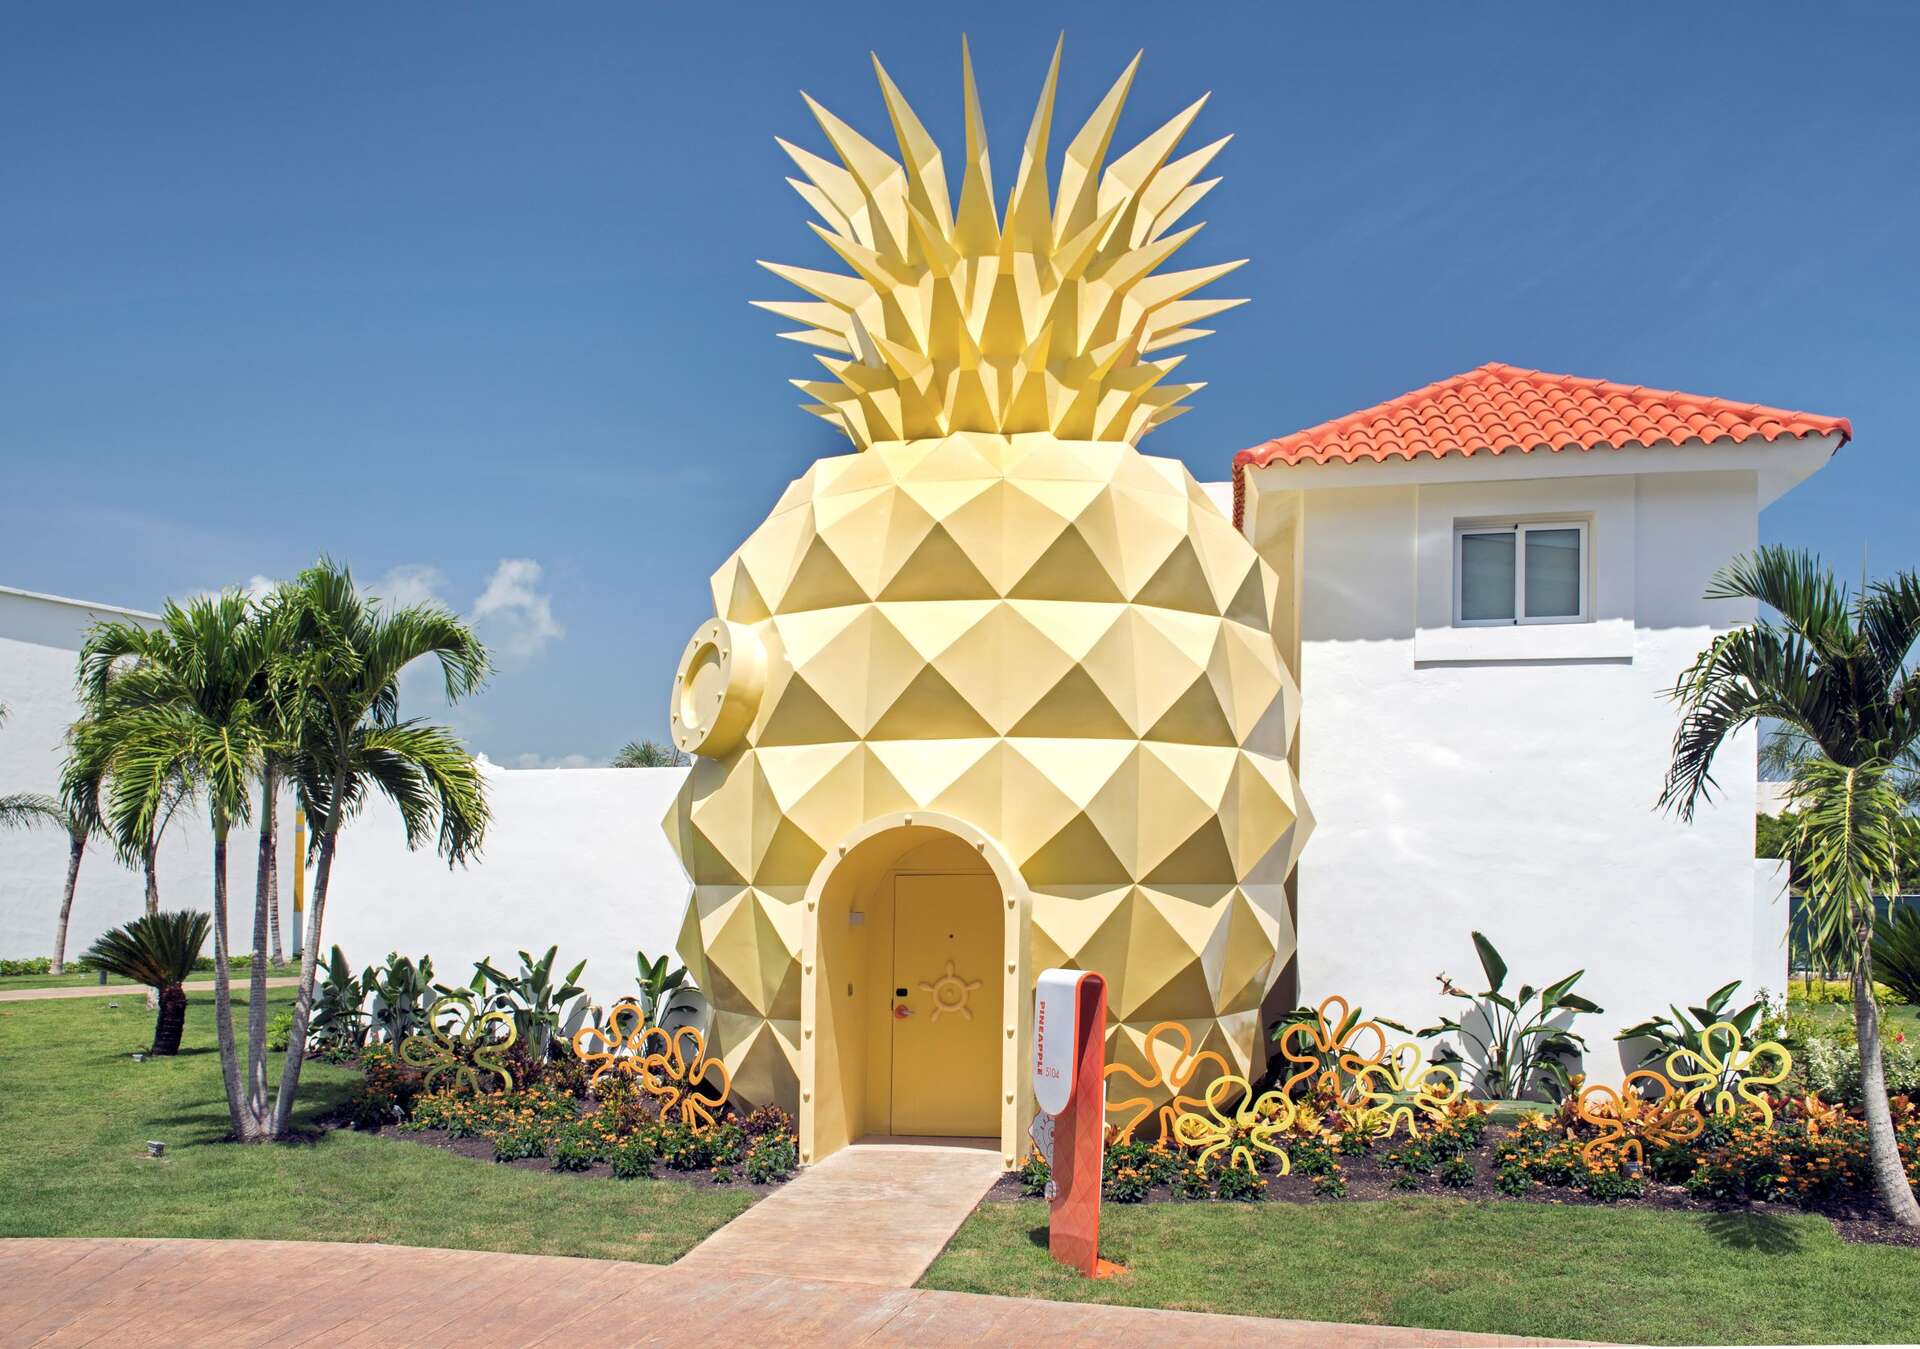 The Pineapple Entrada